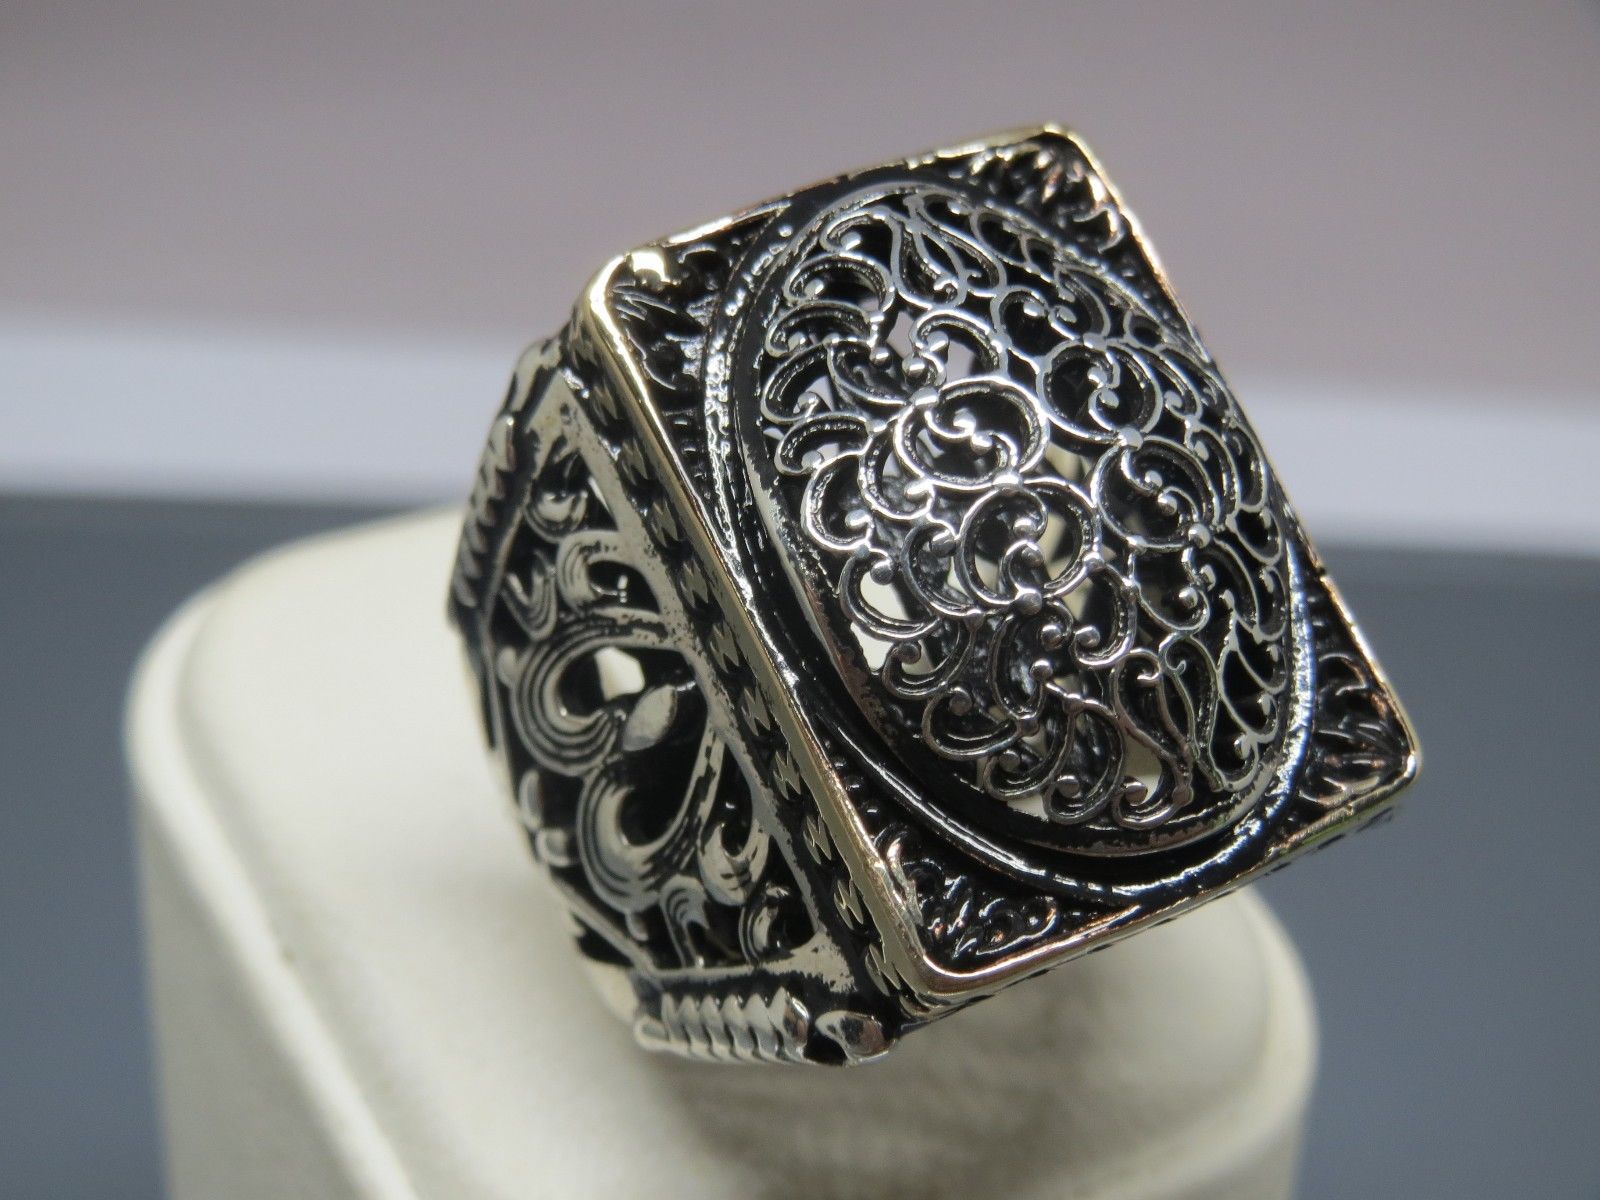 Fine Jewelry Luxury 2 Carat Moissanite Diamond Ring for Men – Rings Universe